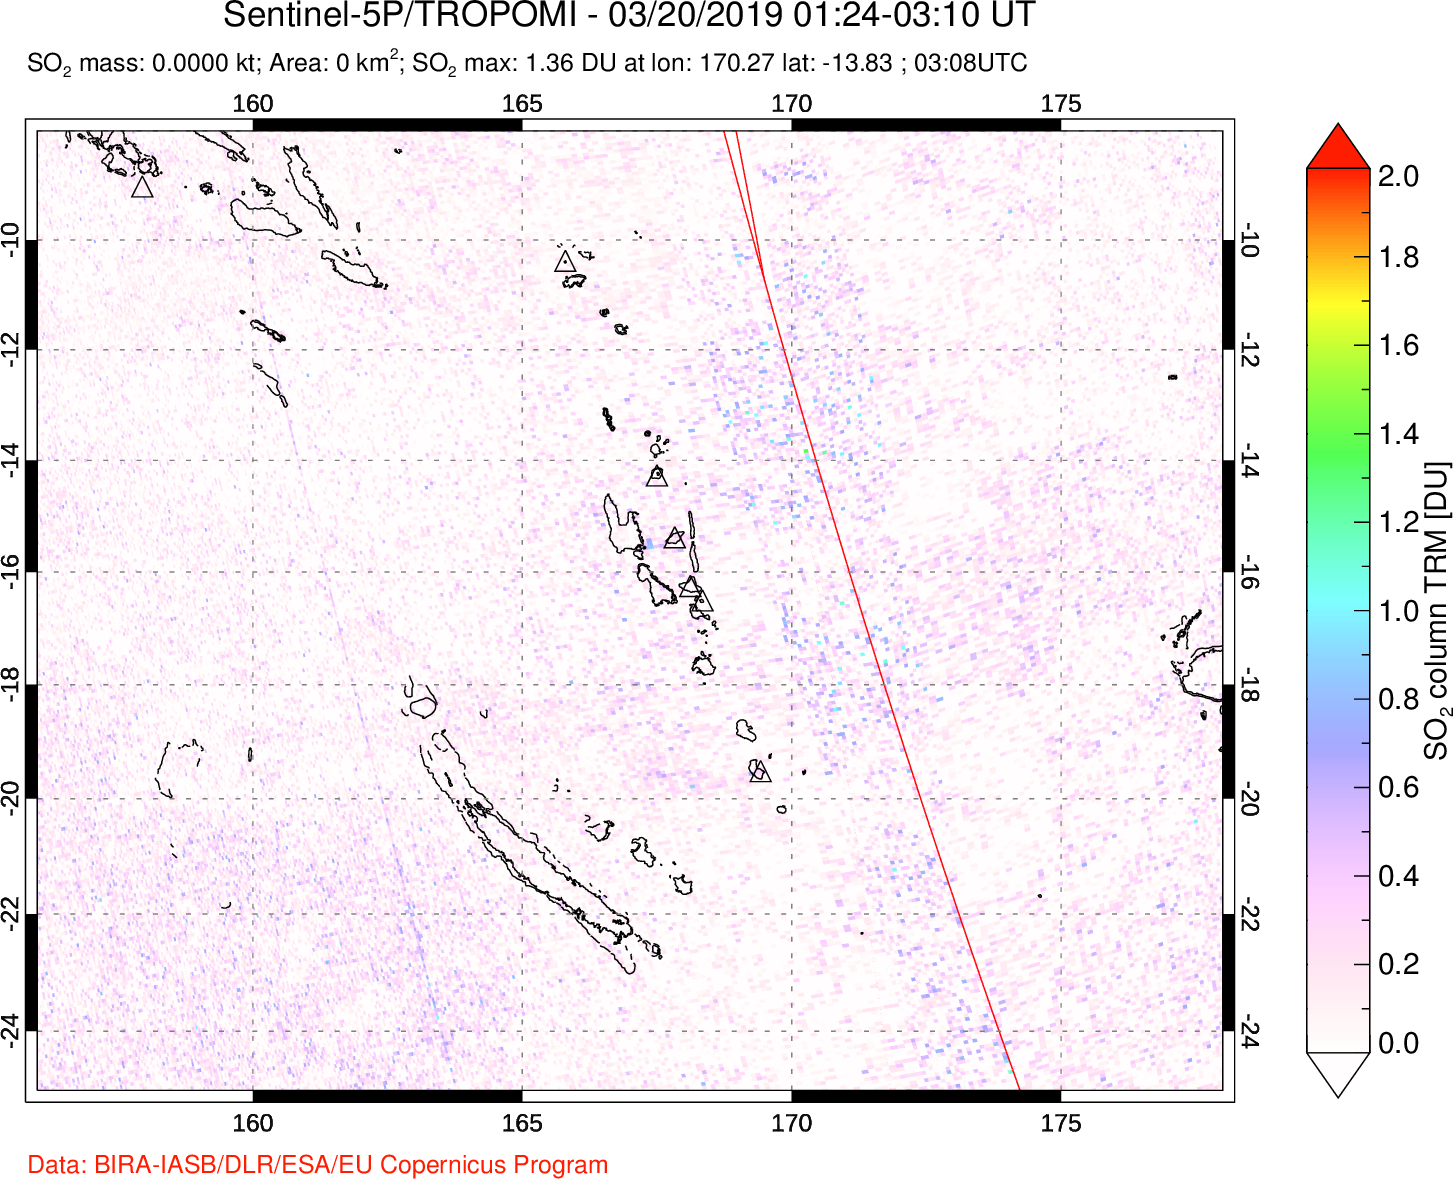 A sulfur dioxide image over Vanuatu, South Pacific on Mar 20, 2019.